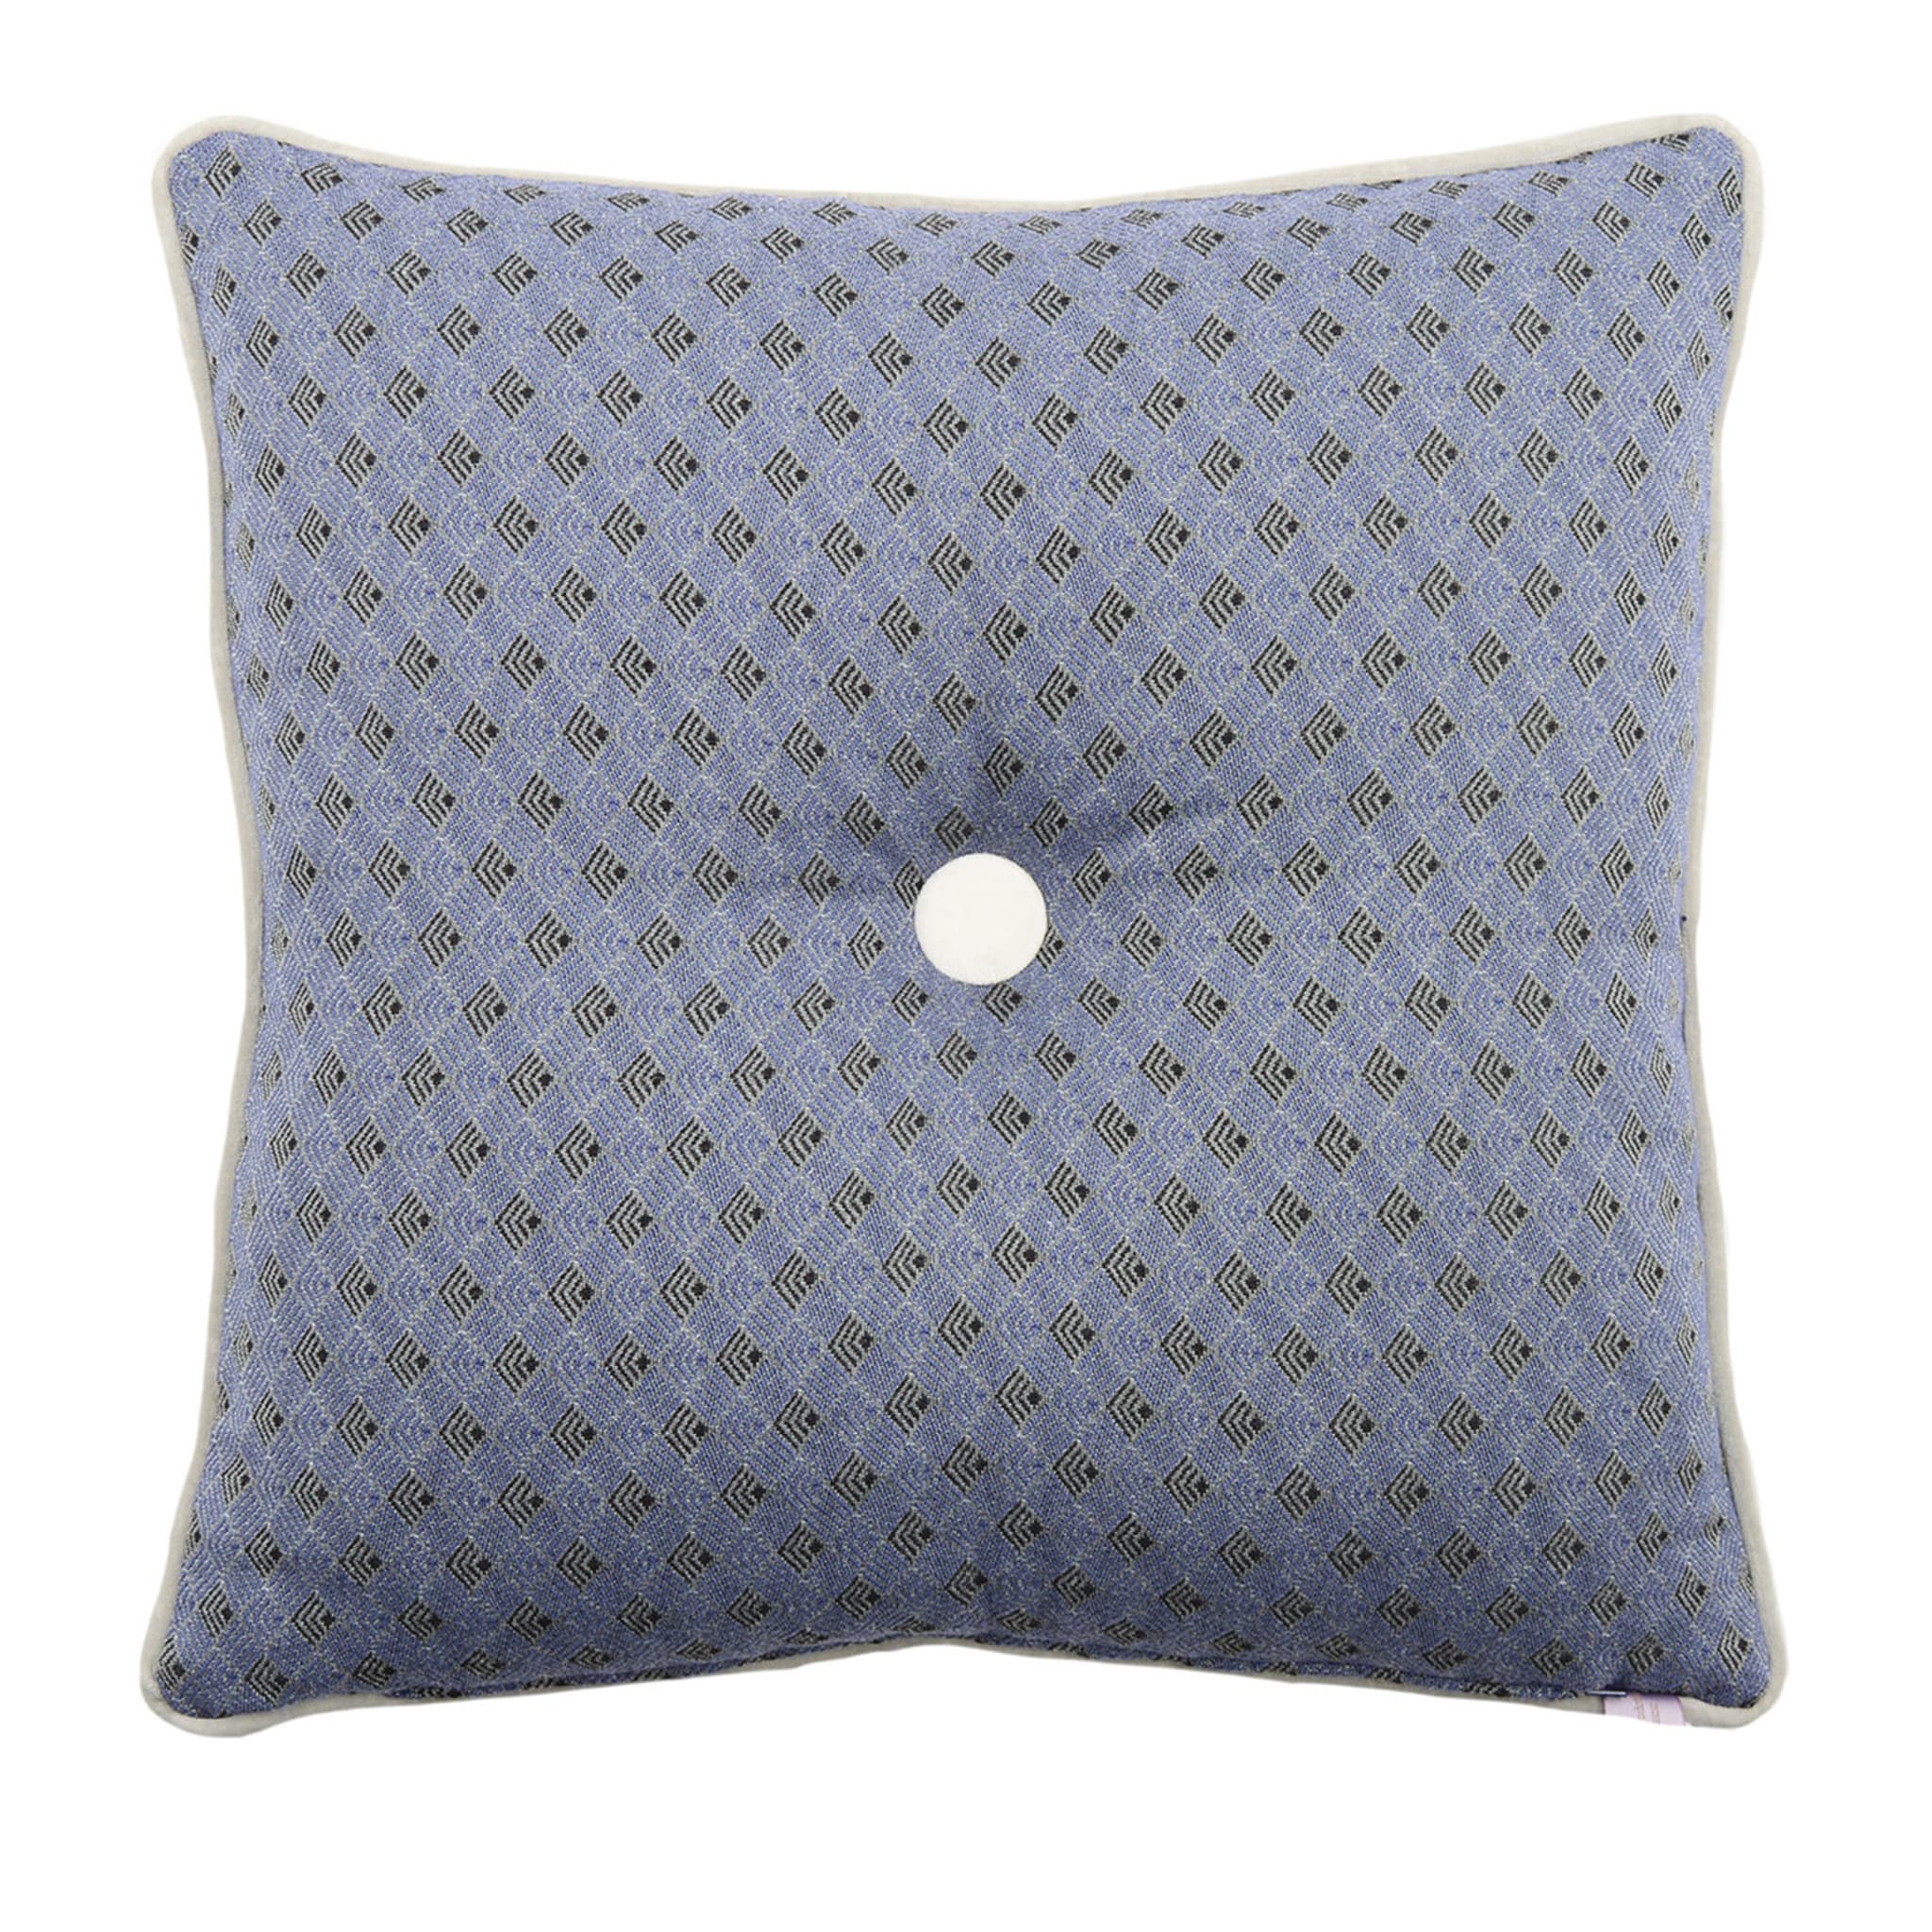 Carrè Cushion in geometric jacquard fabric - Main view